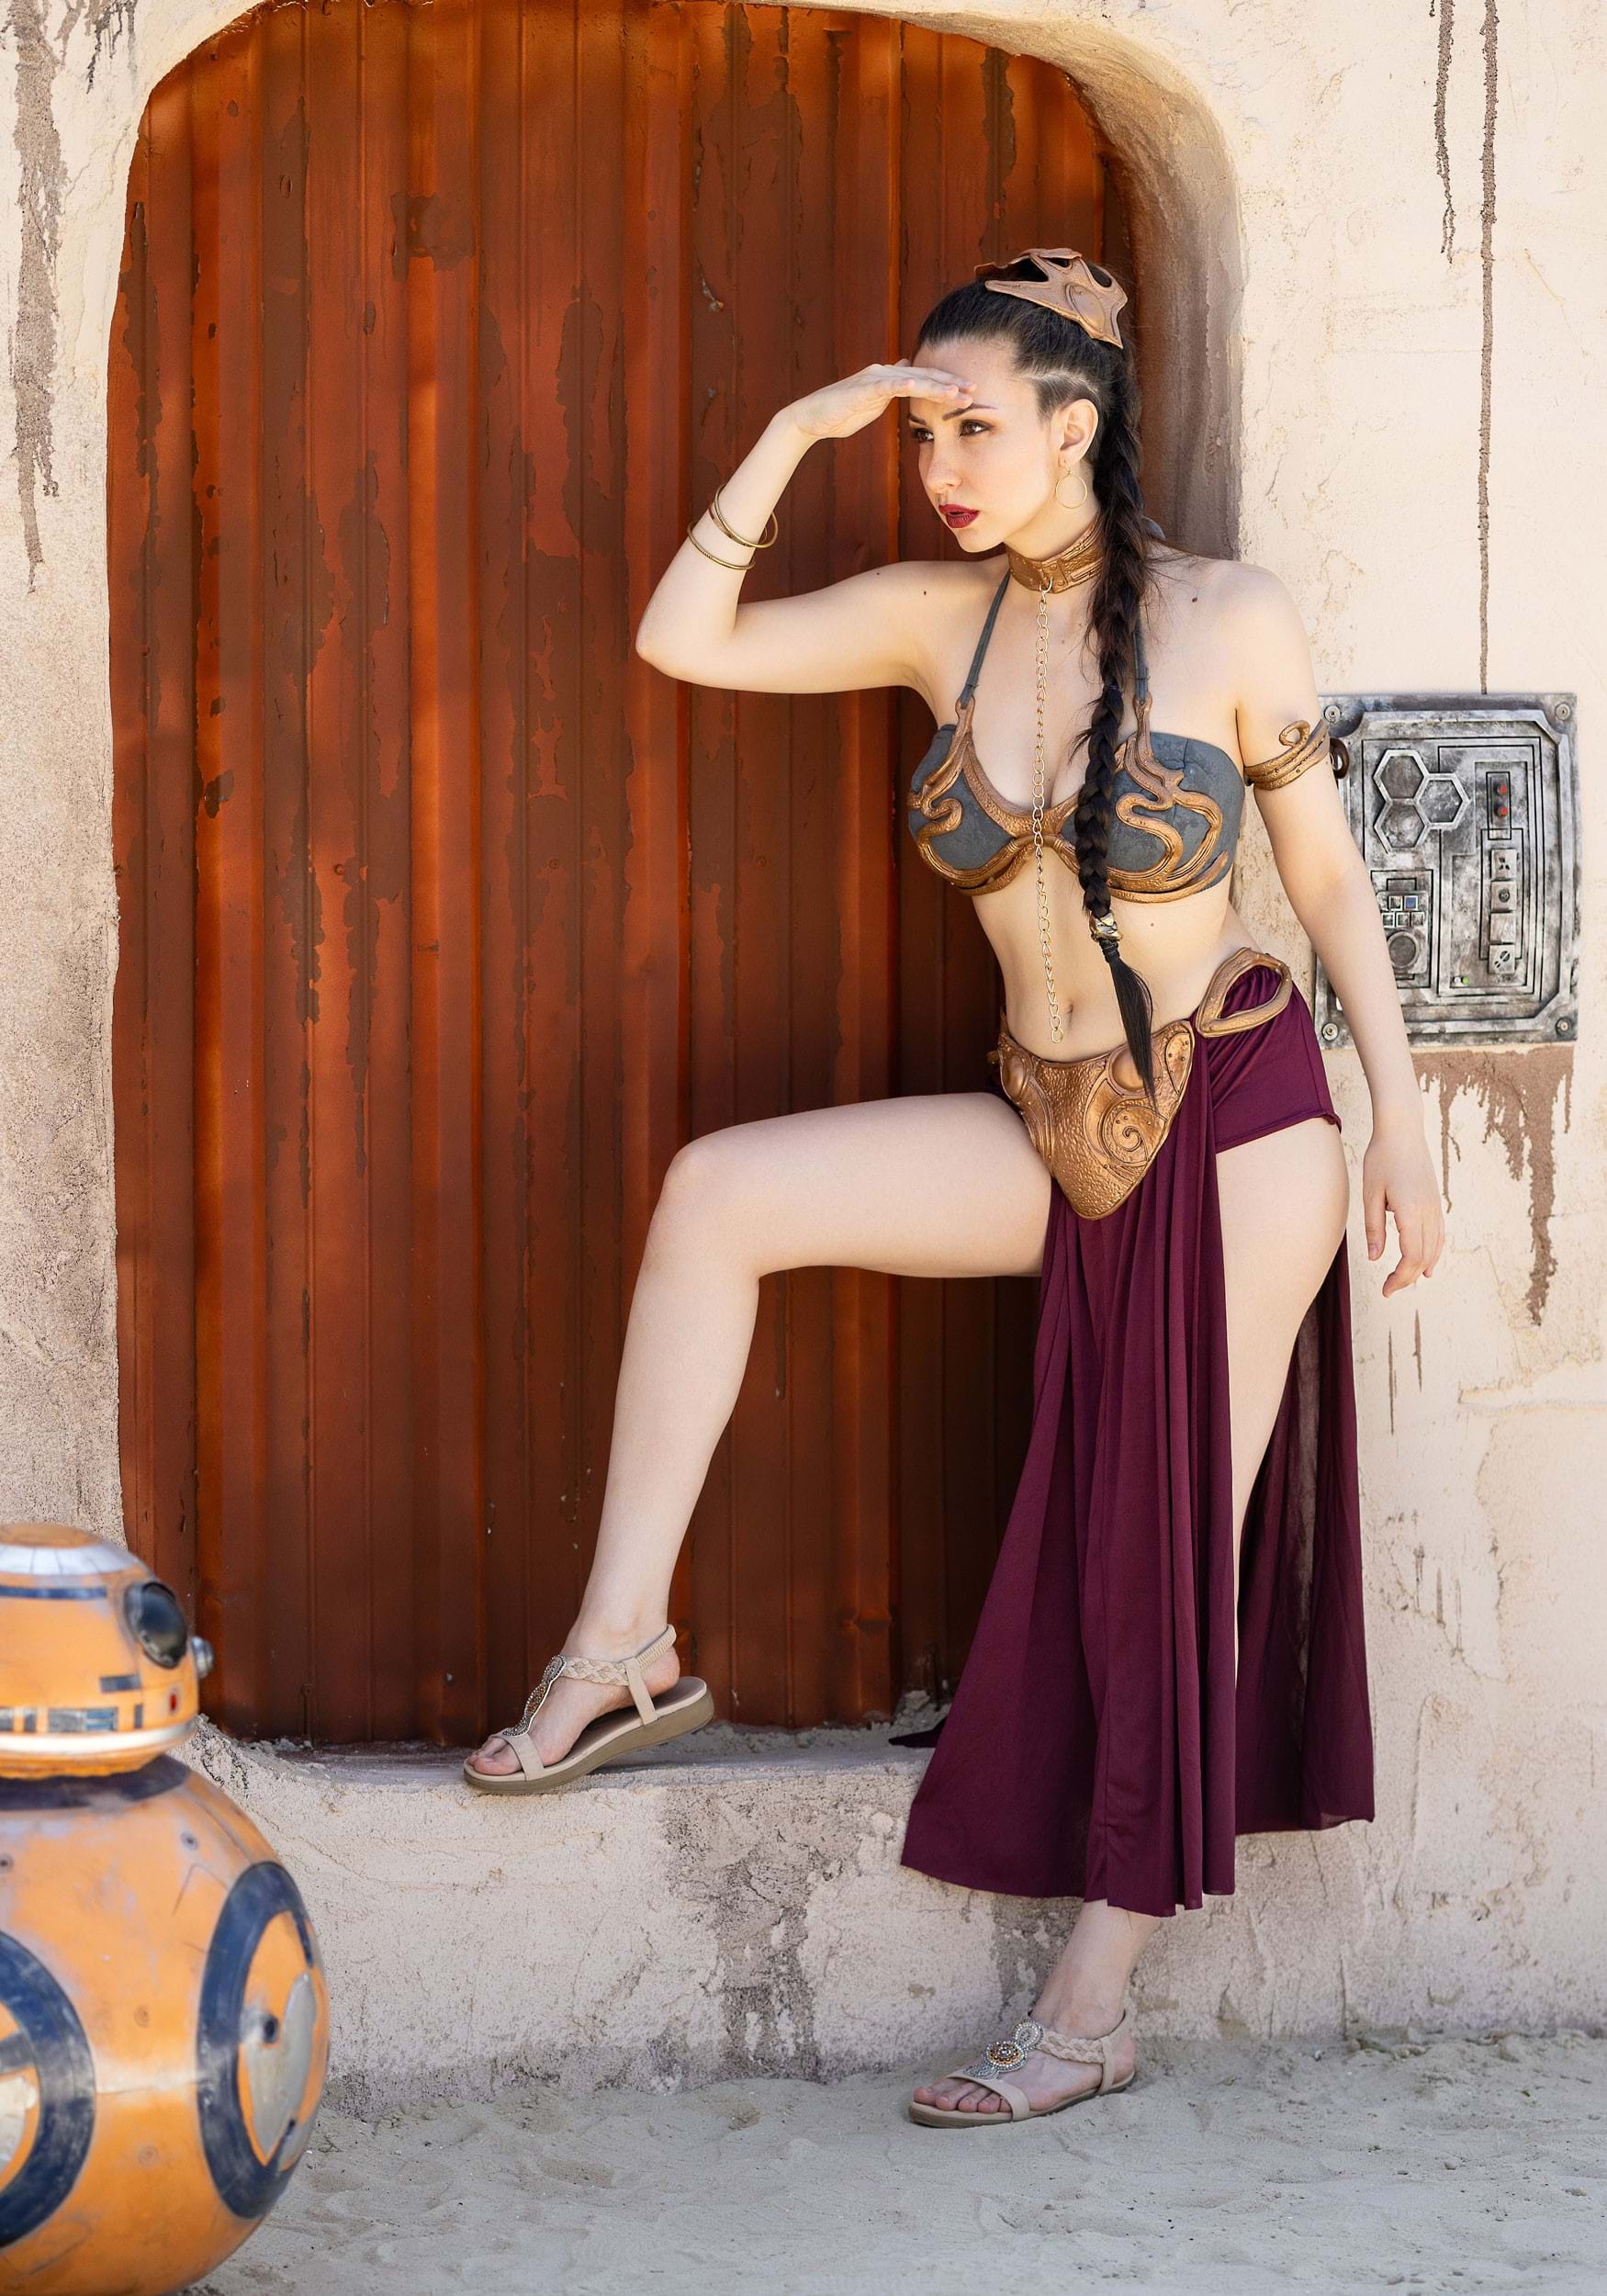 courtney suderman share princess leia cosplay sexy photos